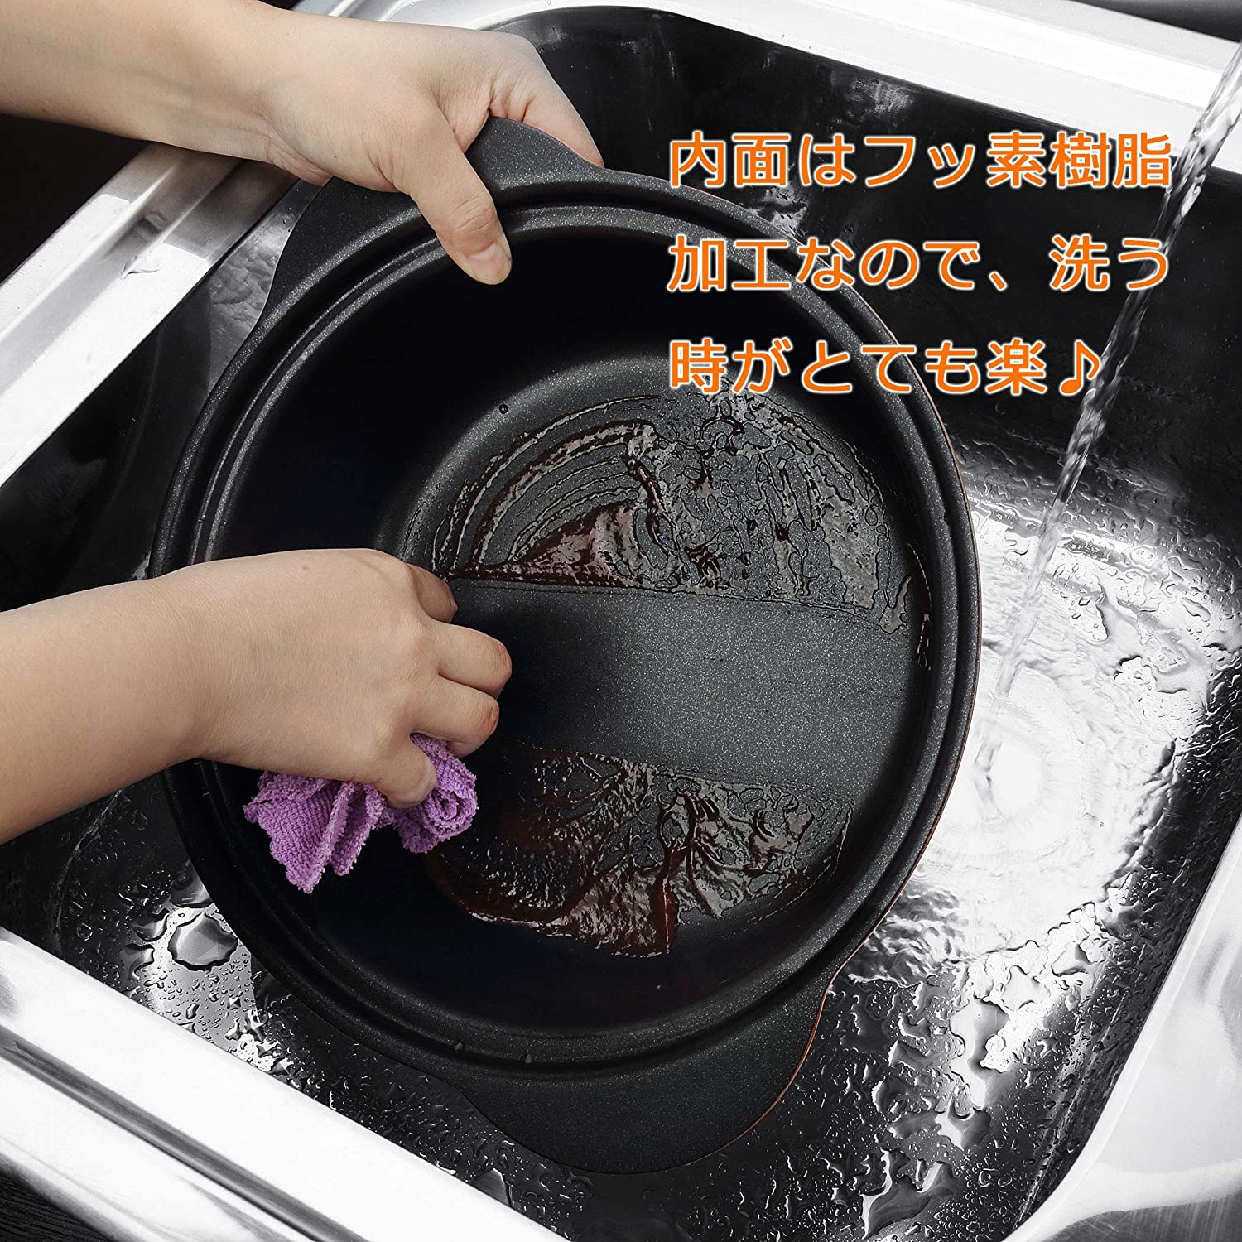 COOKSMARK(クックスマーク) 両手鍋の商品画像4 